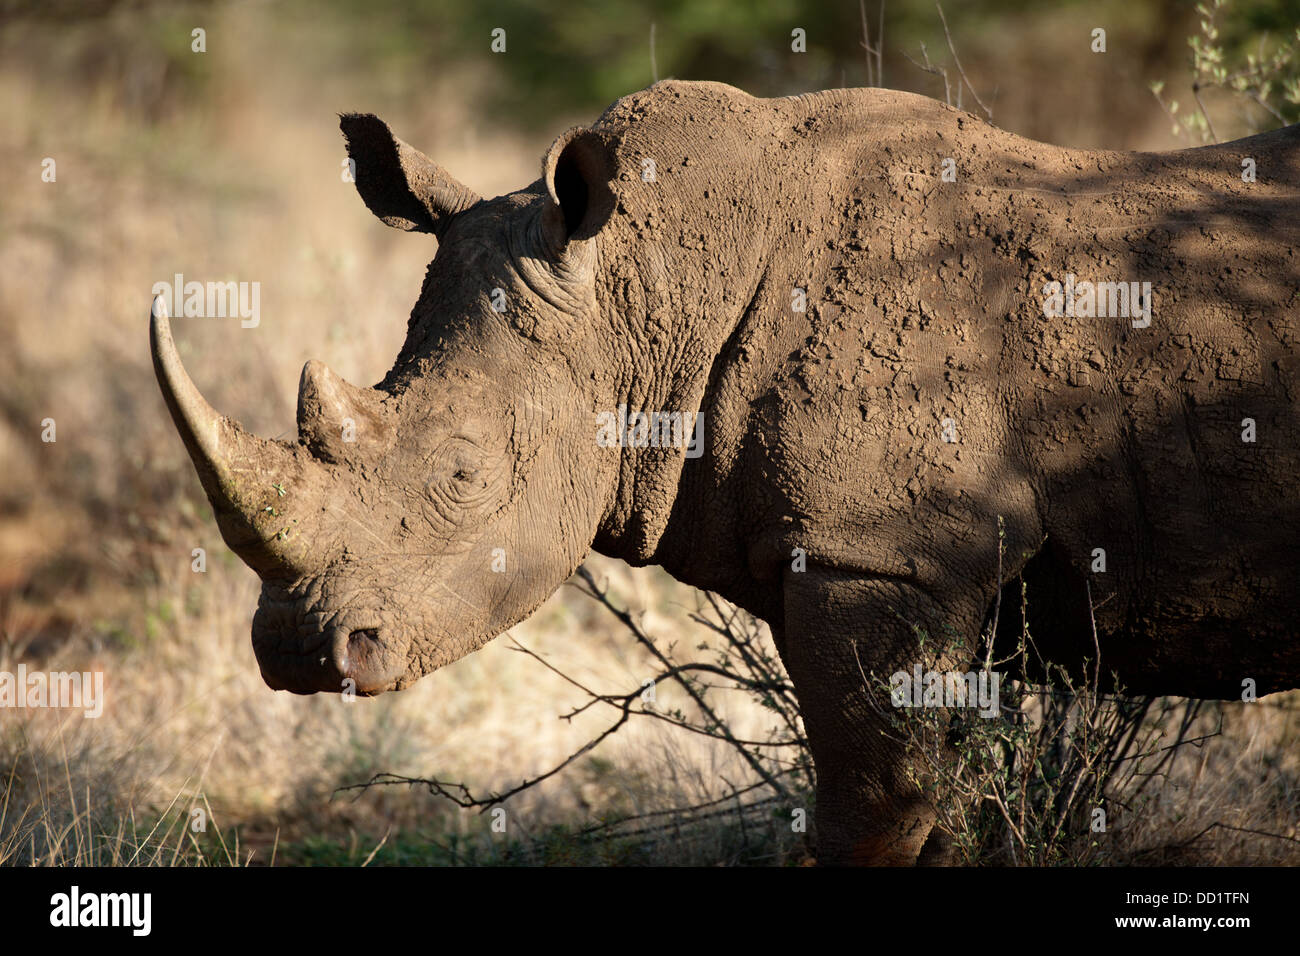 White rhinoceros (Ceratotherium simum), Madikwe Game Reserve, South Africa Stock Photo